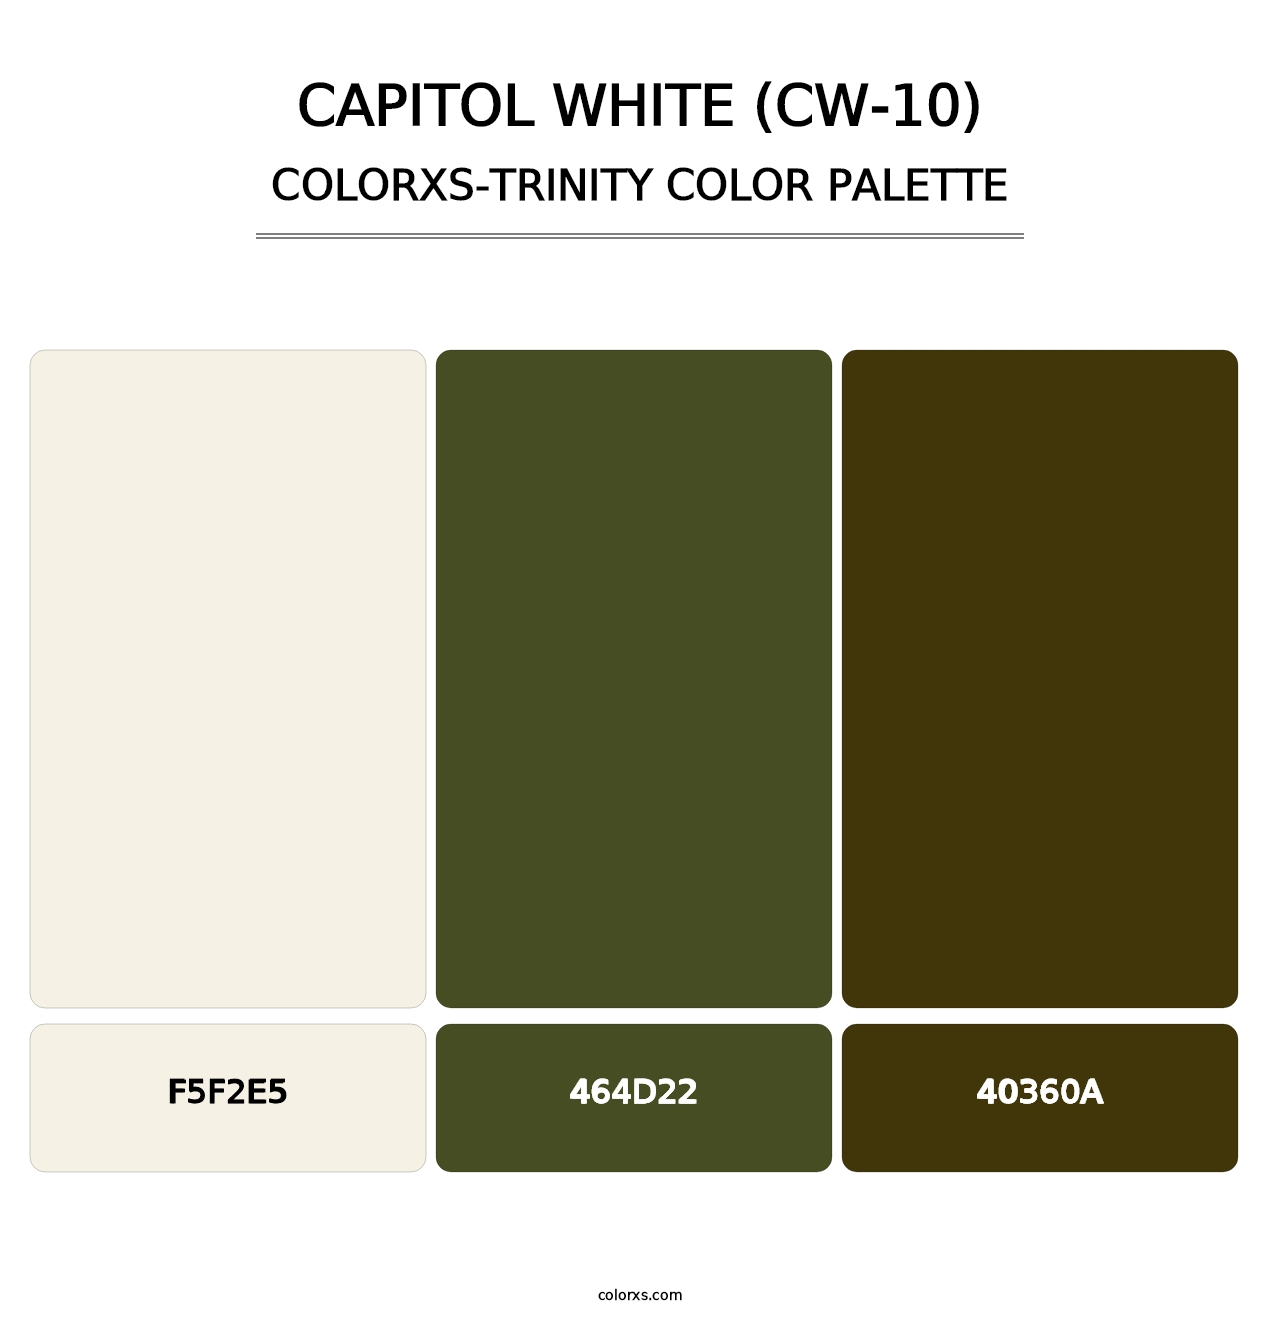 Capitol White (CW-10) - Colorxs Trinity Palette